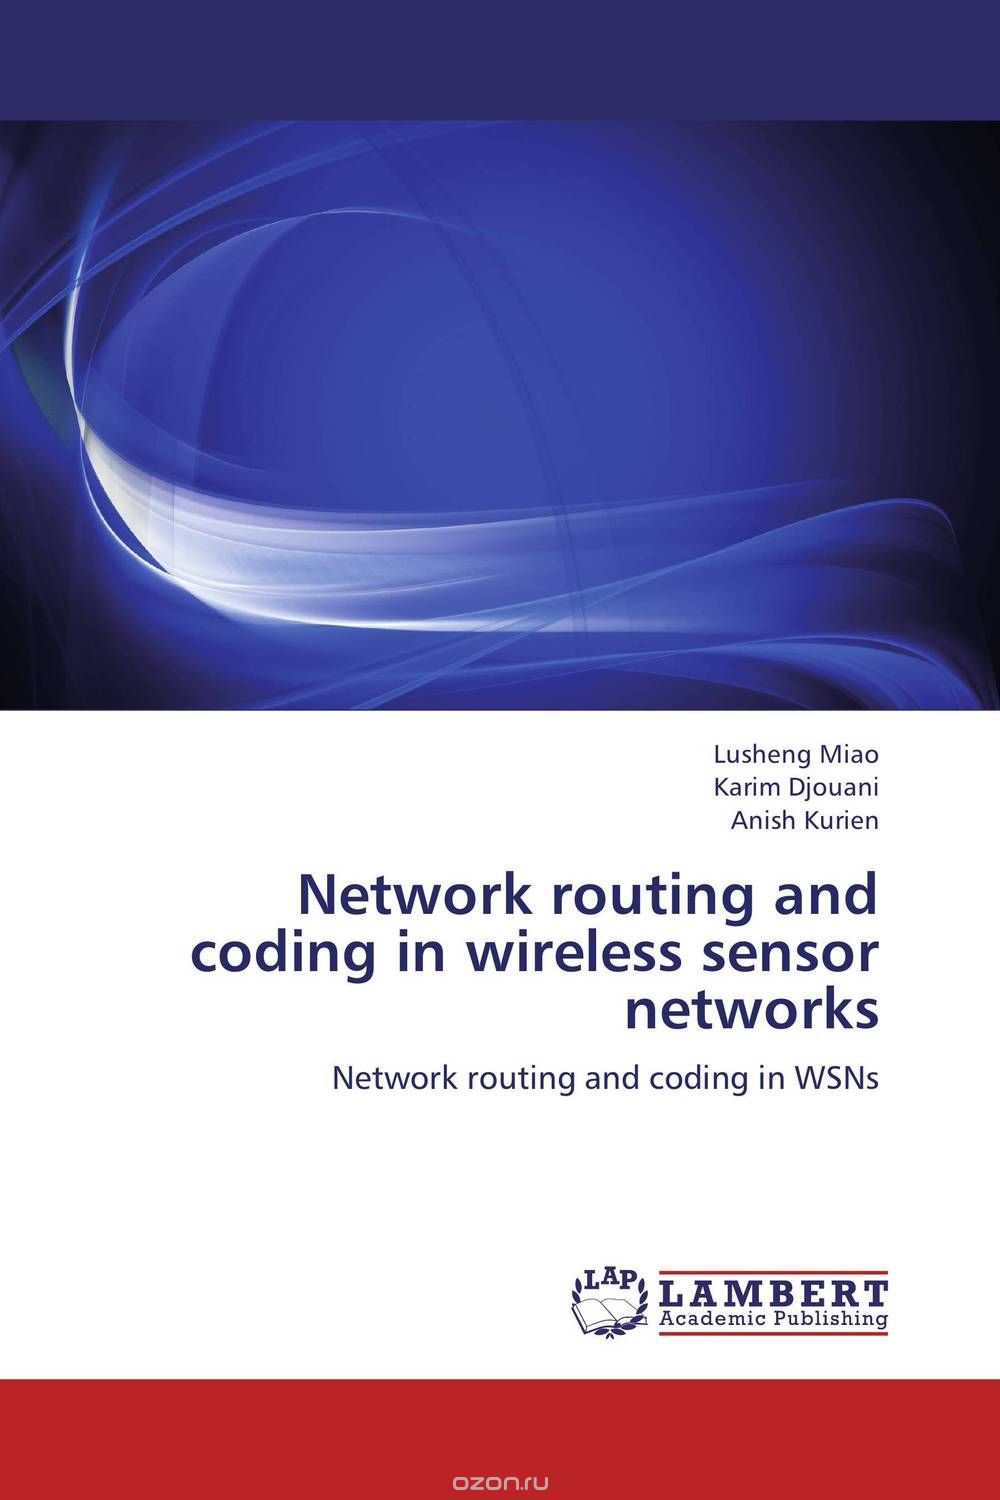 Скачать книгу "Network routing and coding in wireless sensor networks"